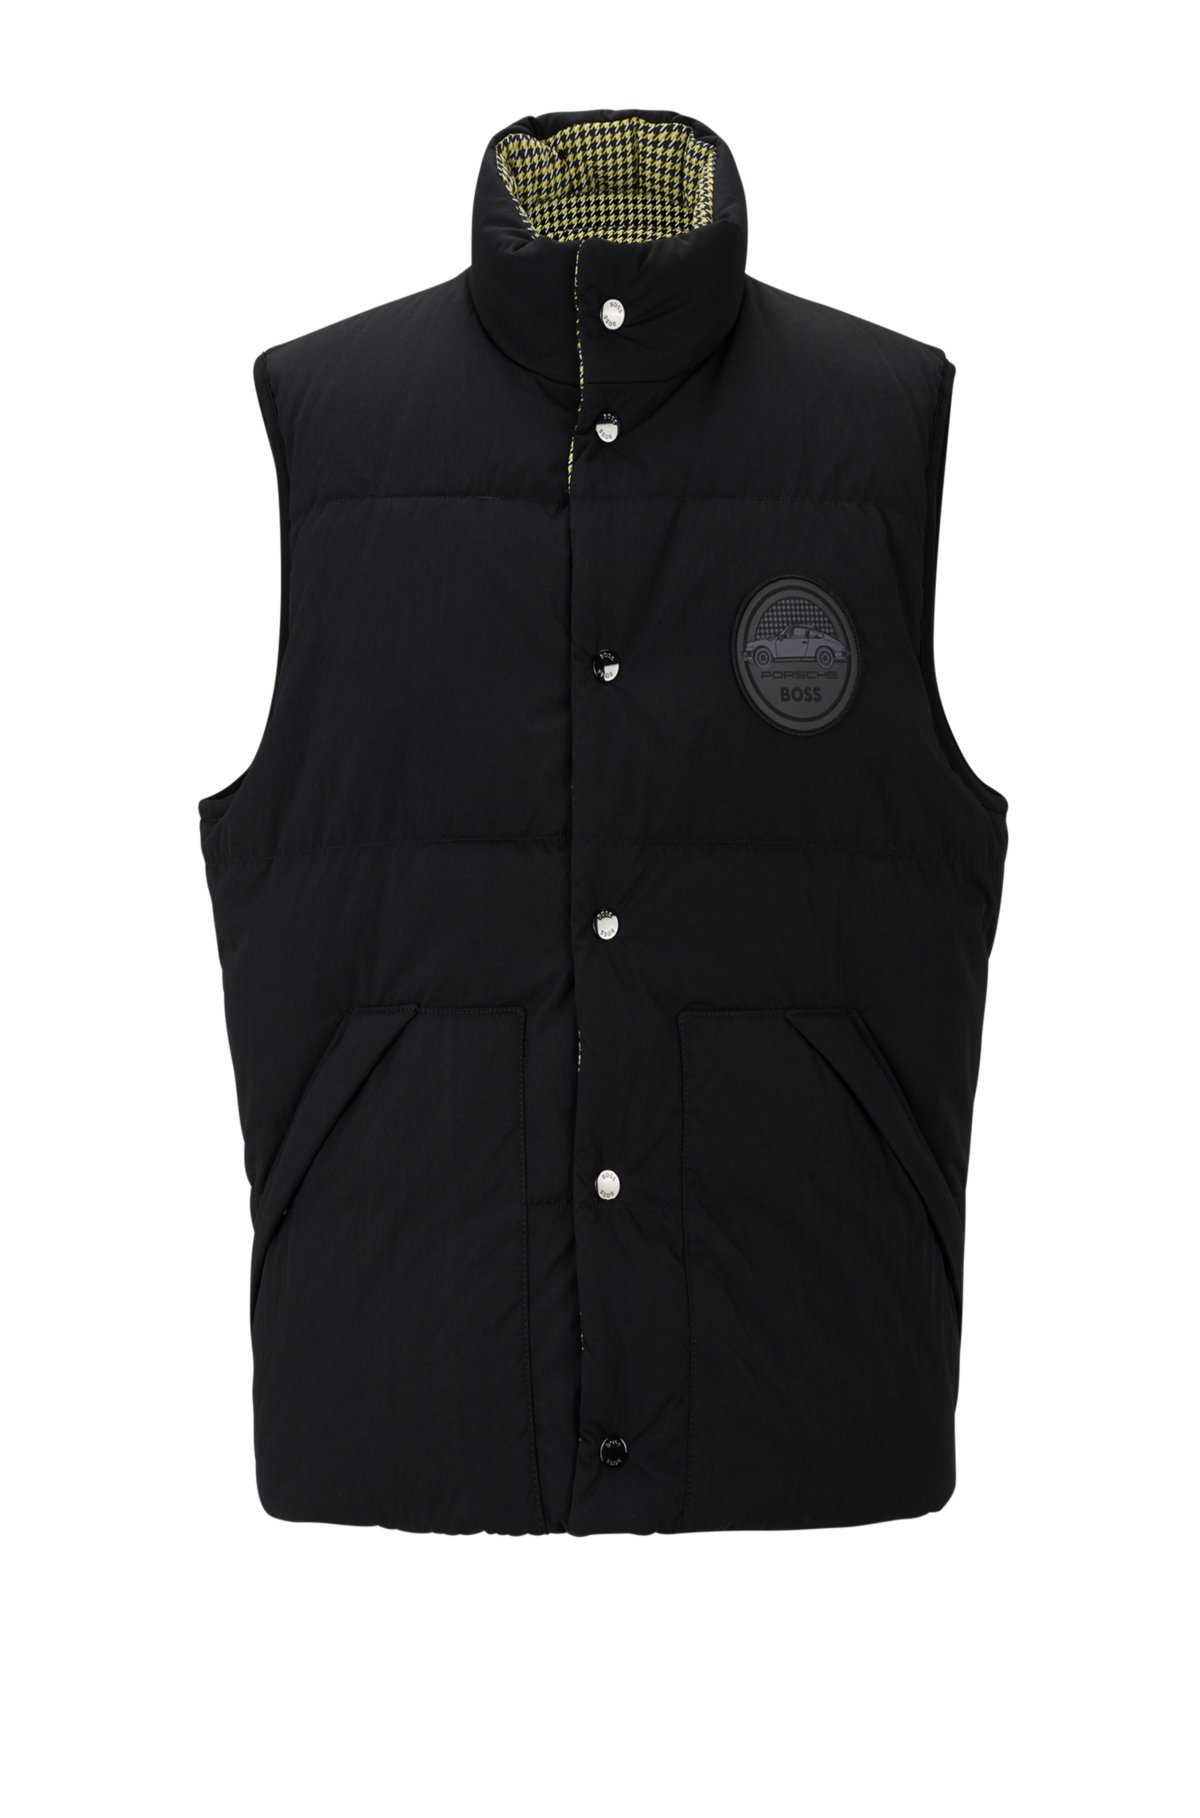 Porsche x BOSS reversible vest in a regular fit, Black